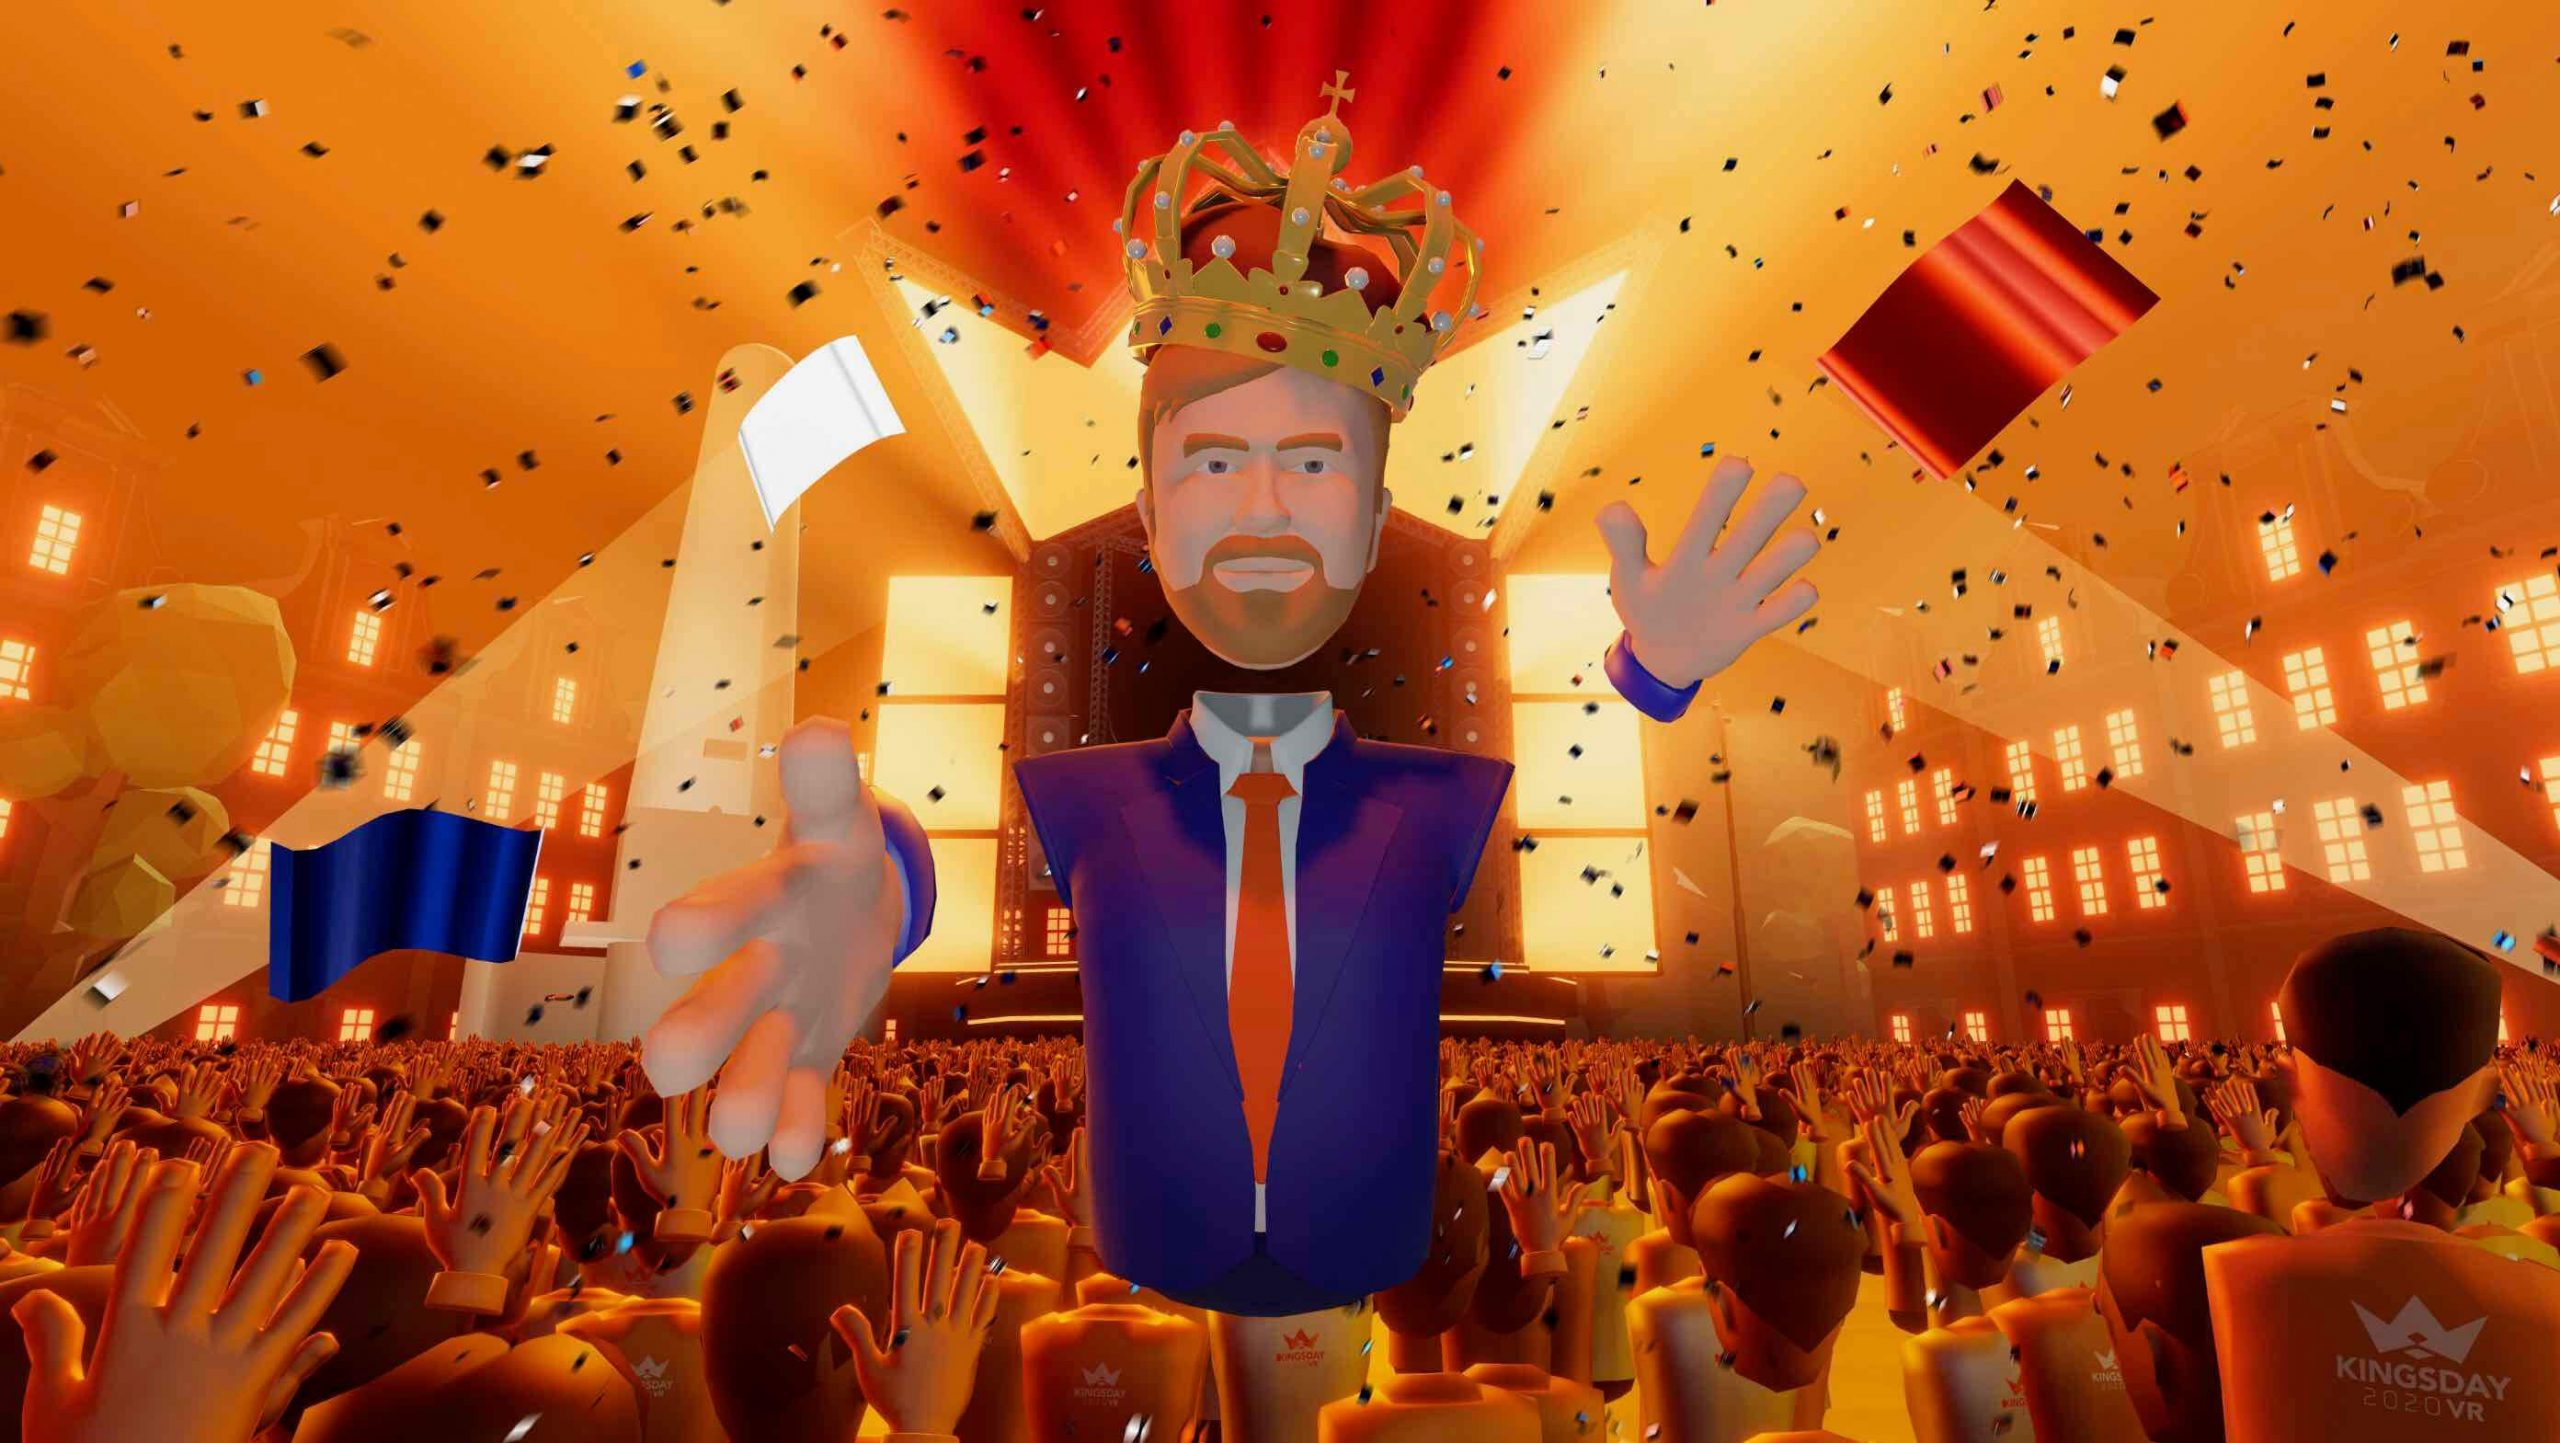 Koningsdag in virtual reality- Een festival voor het goede doel